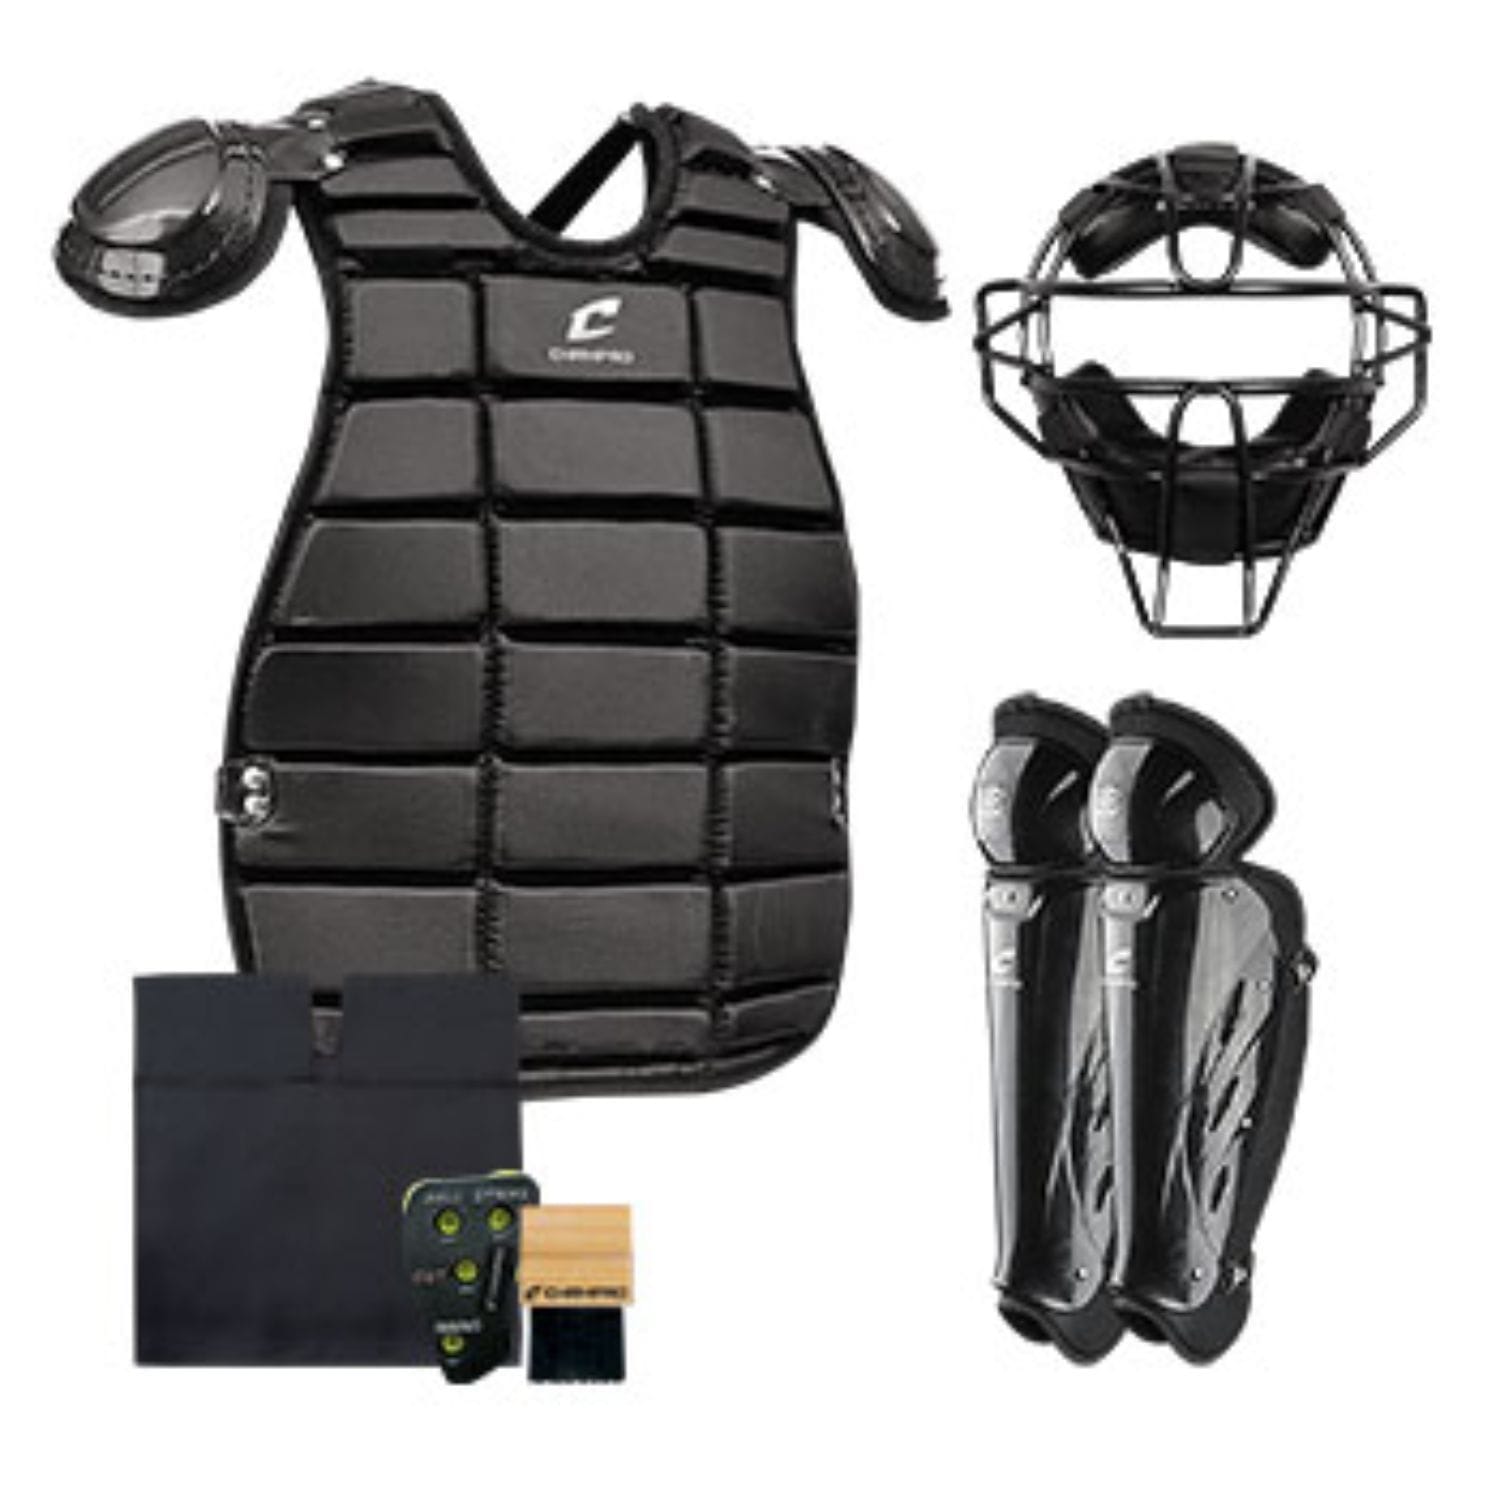 Champro Sports : Baseball Champro Starter Umpire Kit